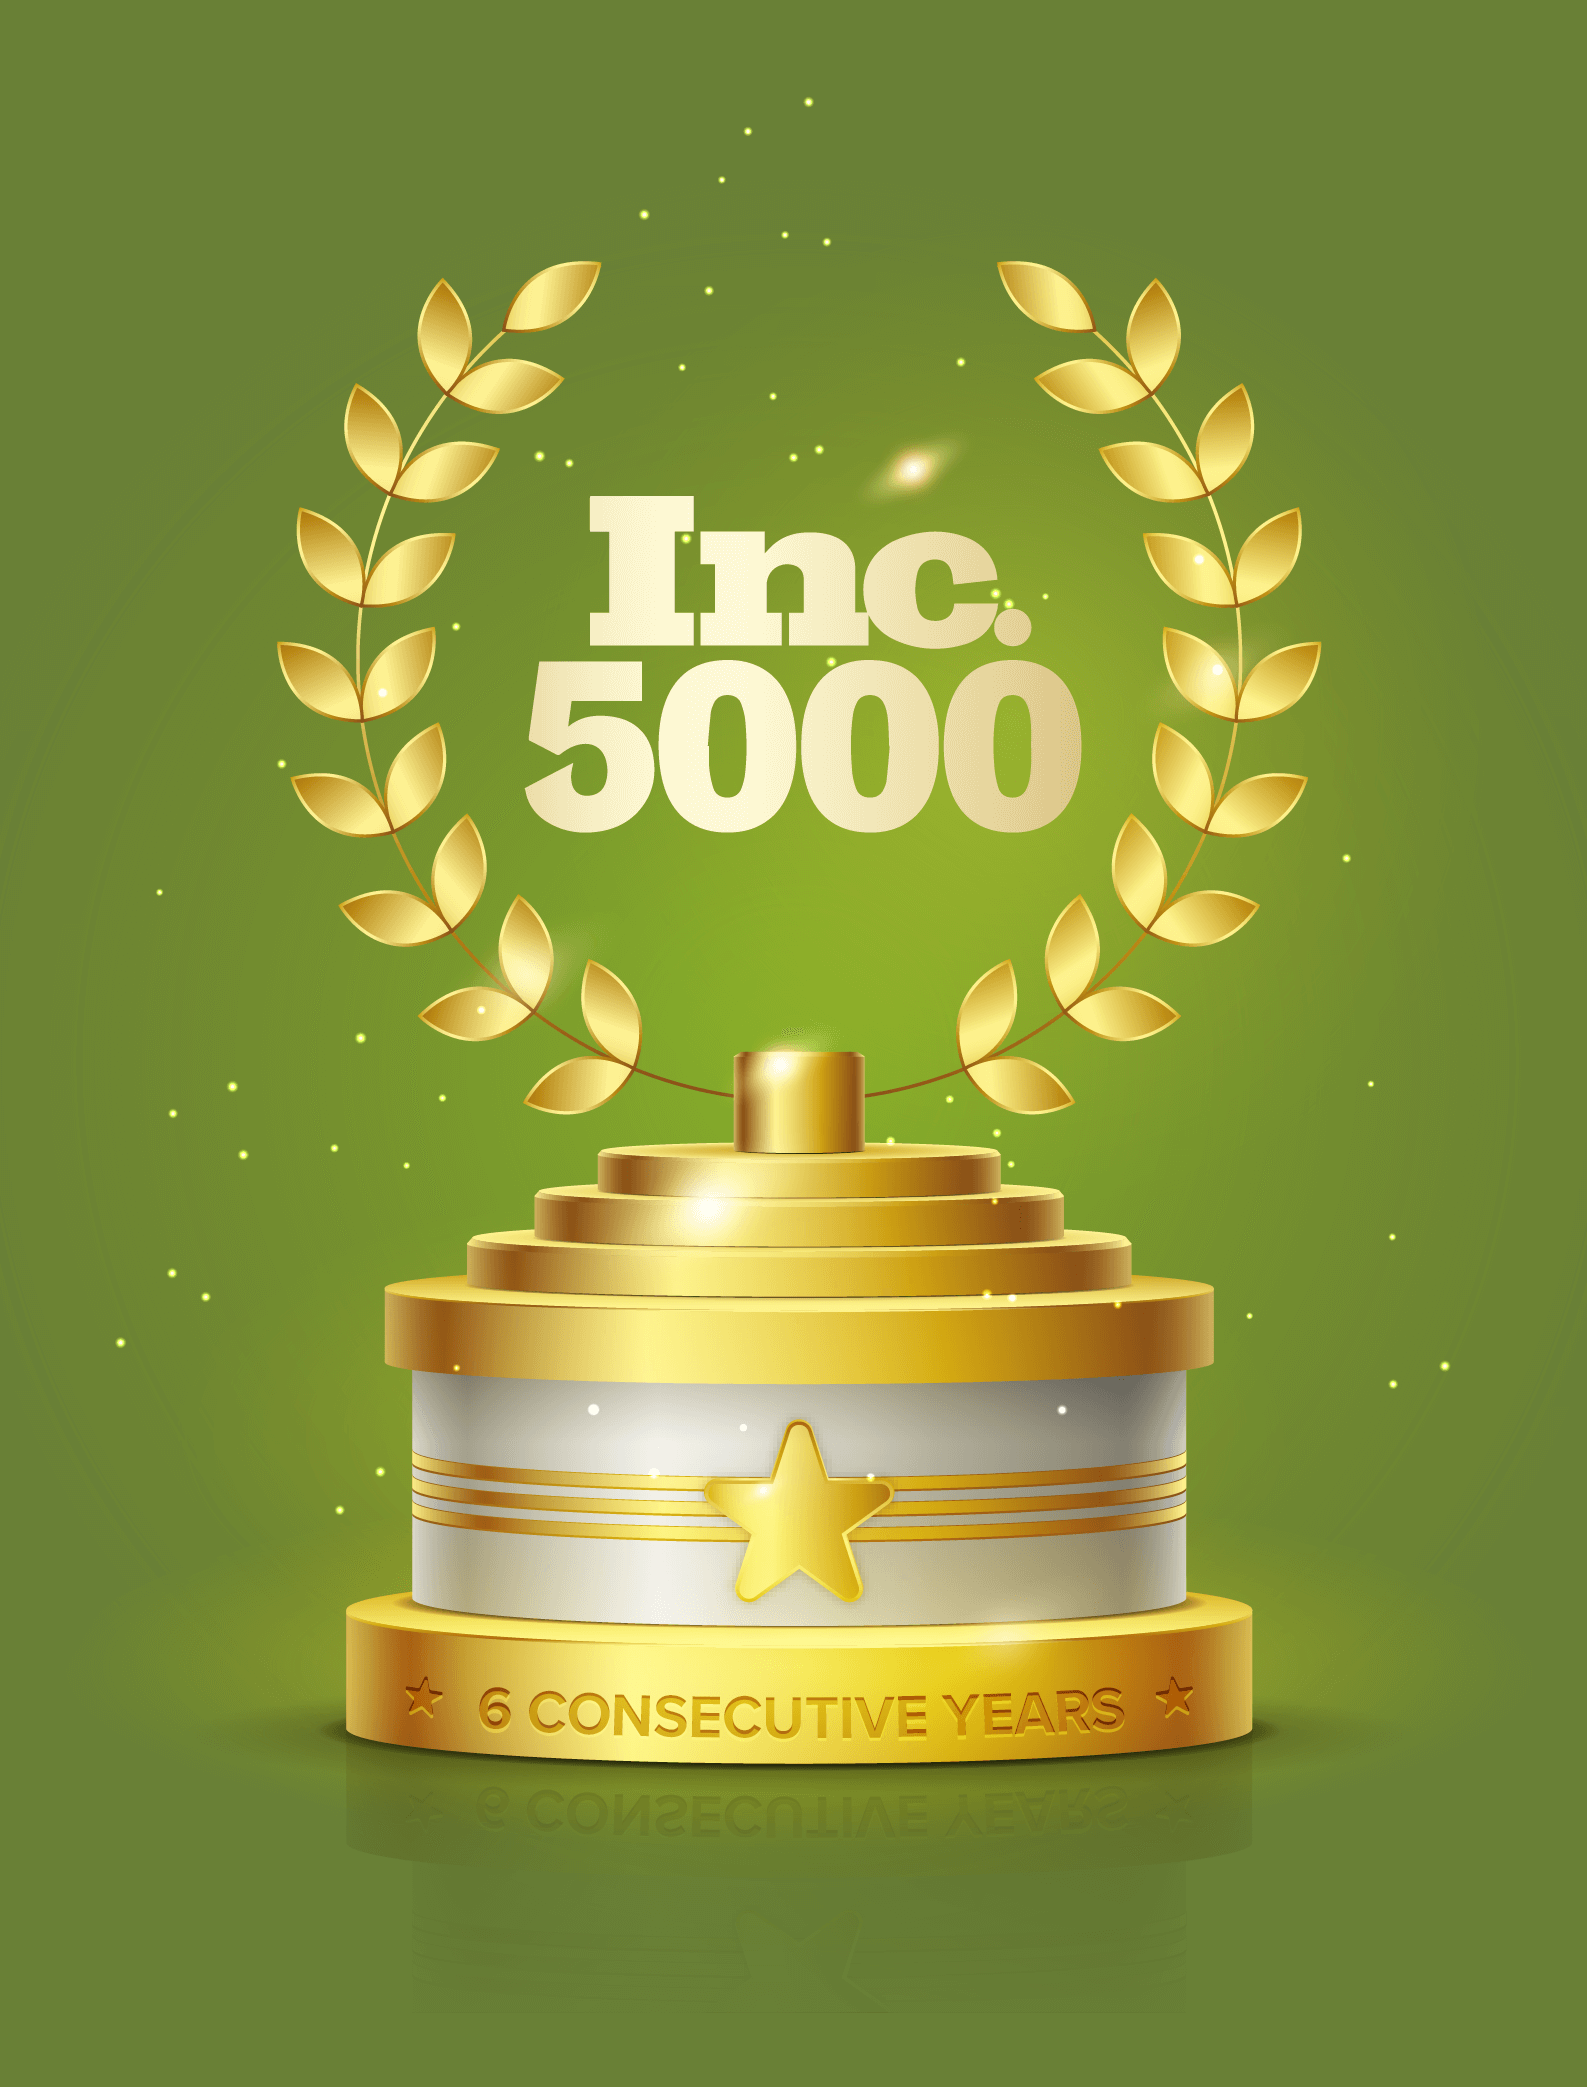 Inc. 5000 6th Consecutive Years Green